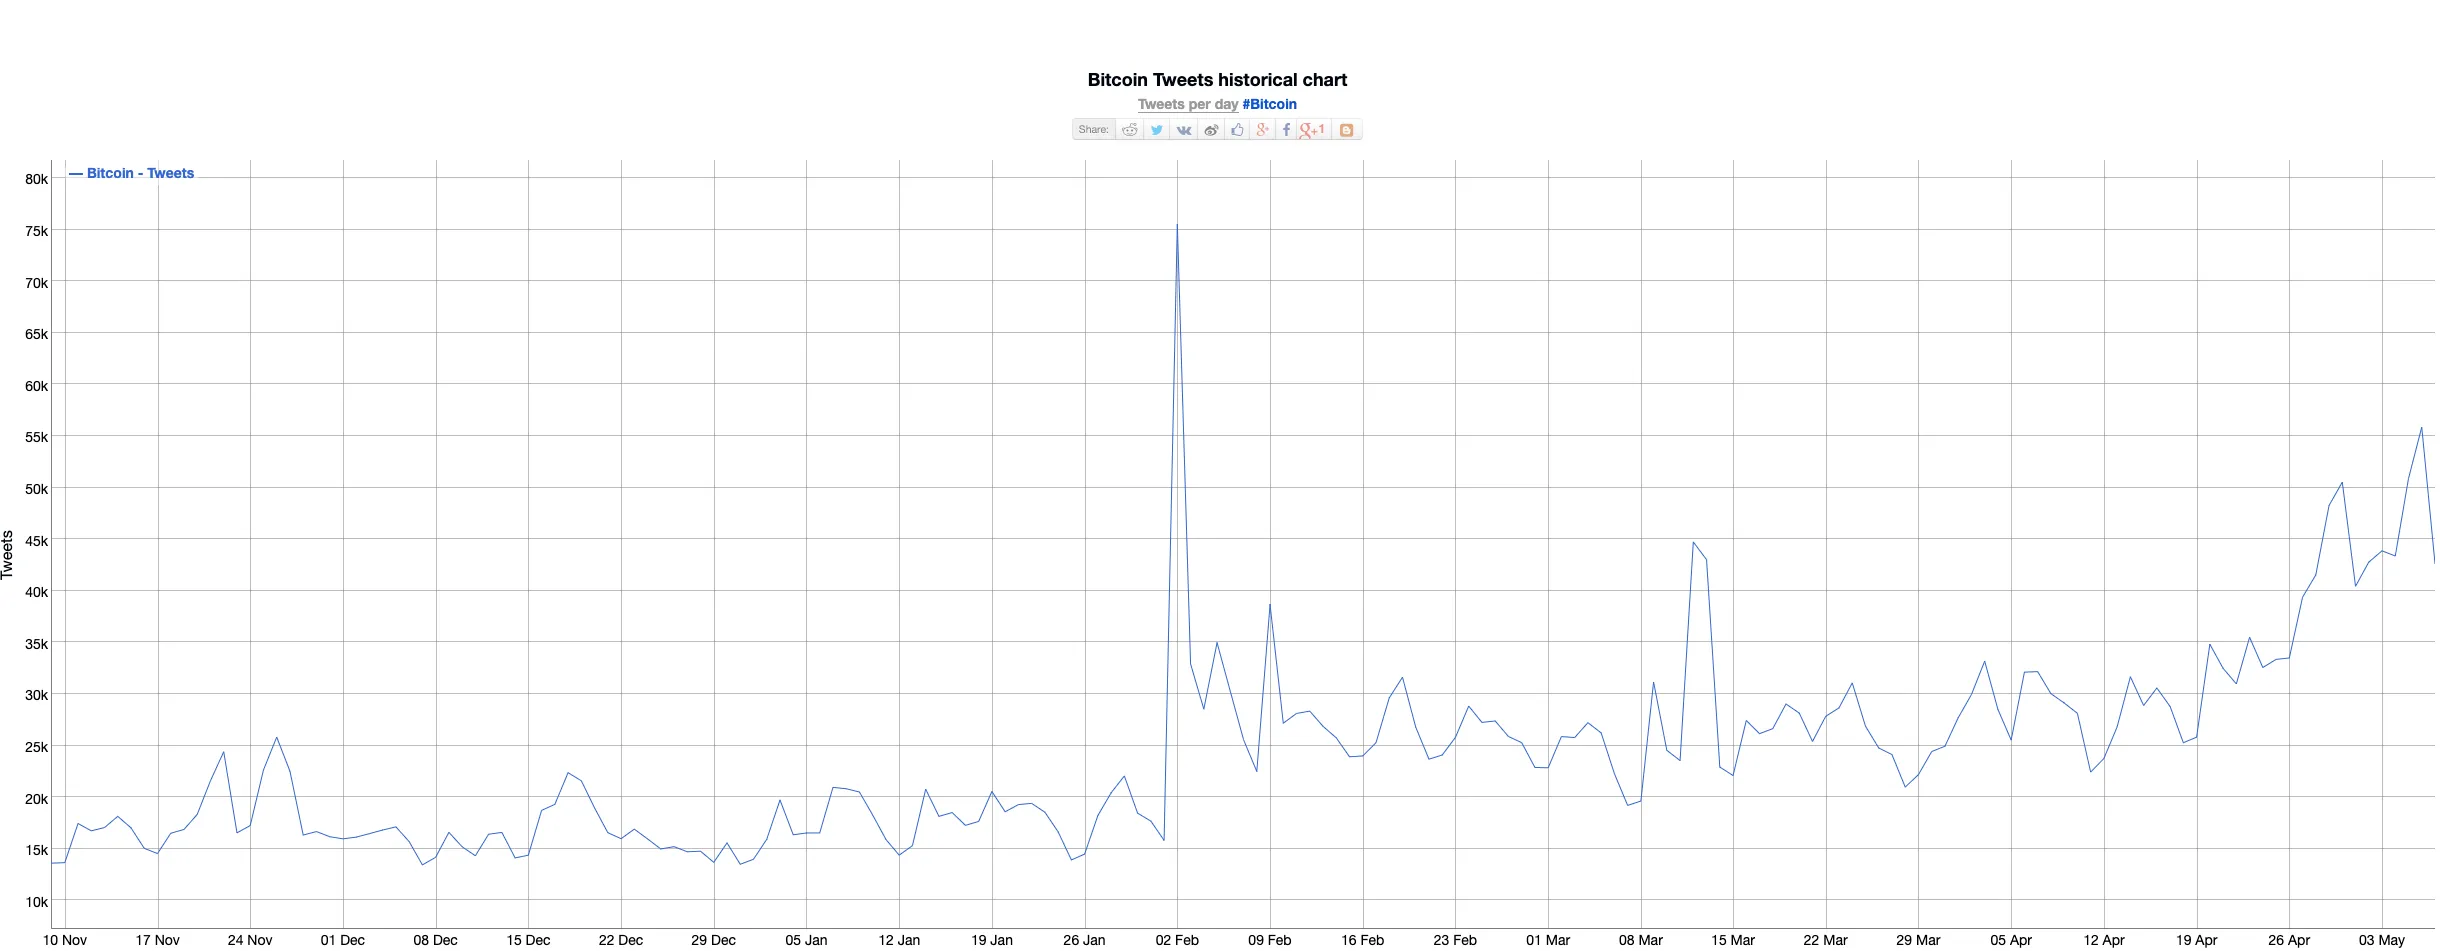 Bitinfocharts Twitter search volume for Bitcoin.